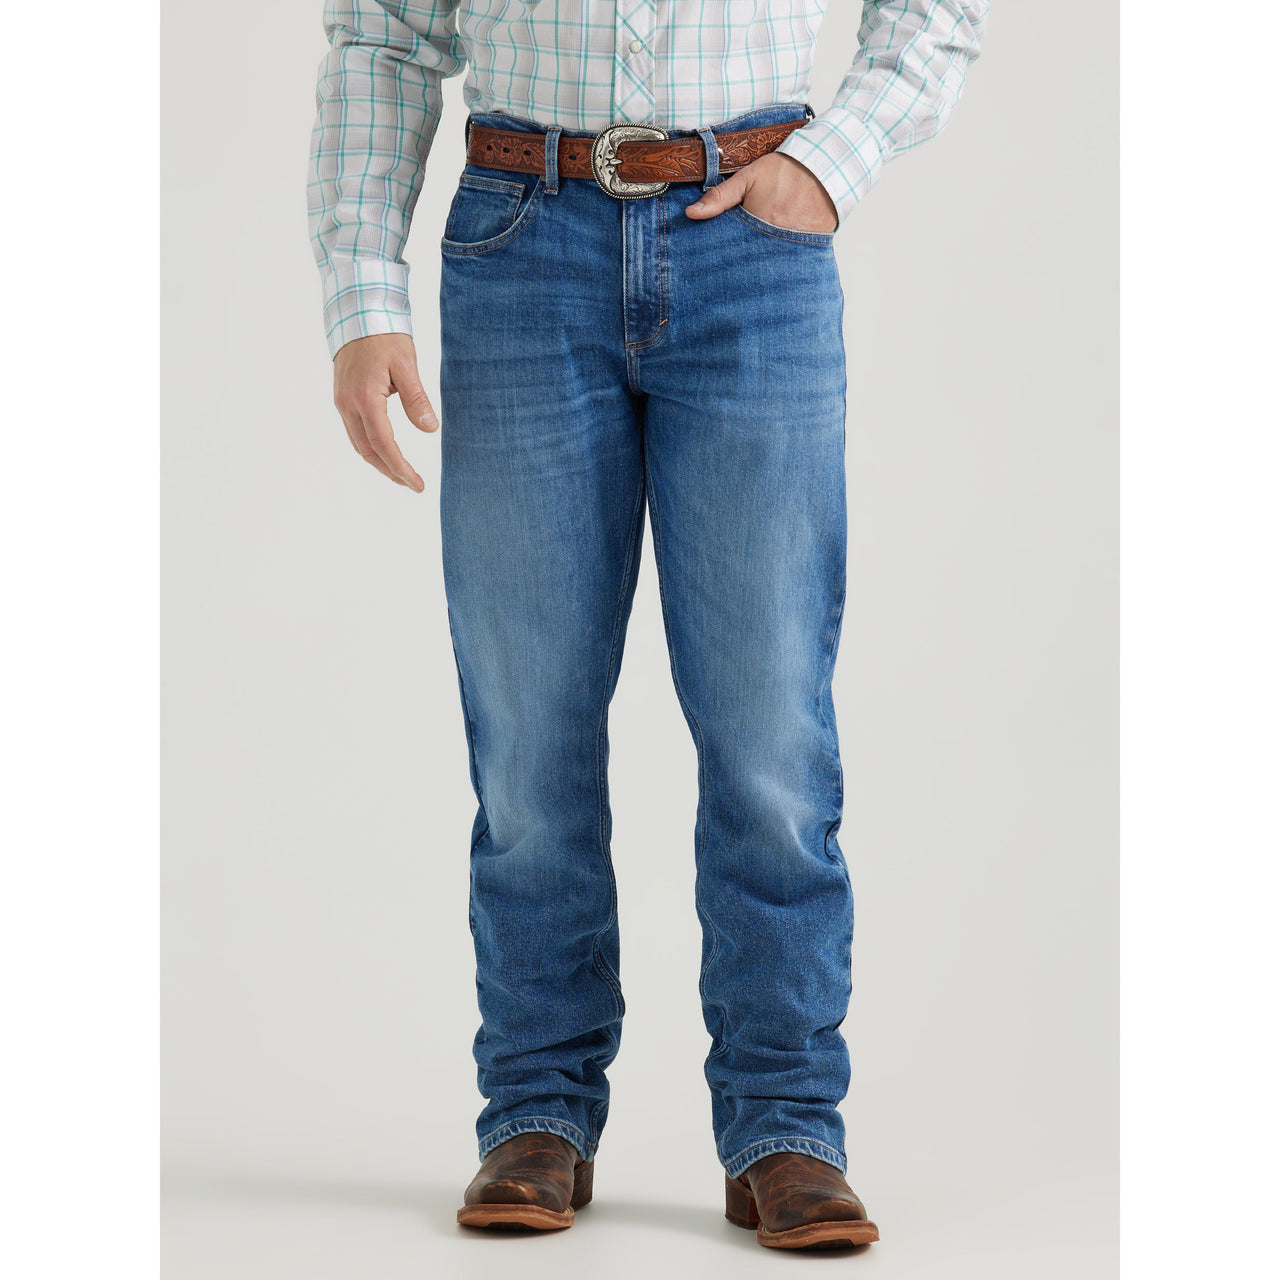 Wrangler Men's 20X Vintage Bootcut Jeans - Backwater